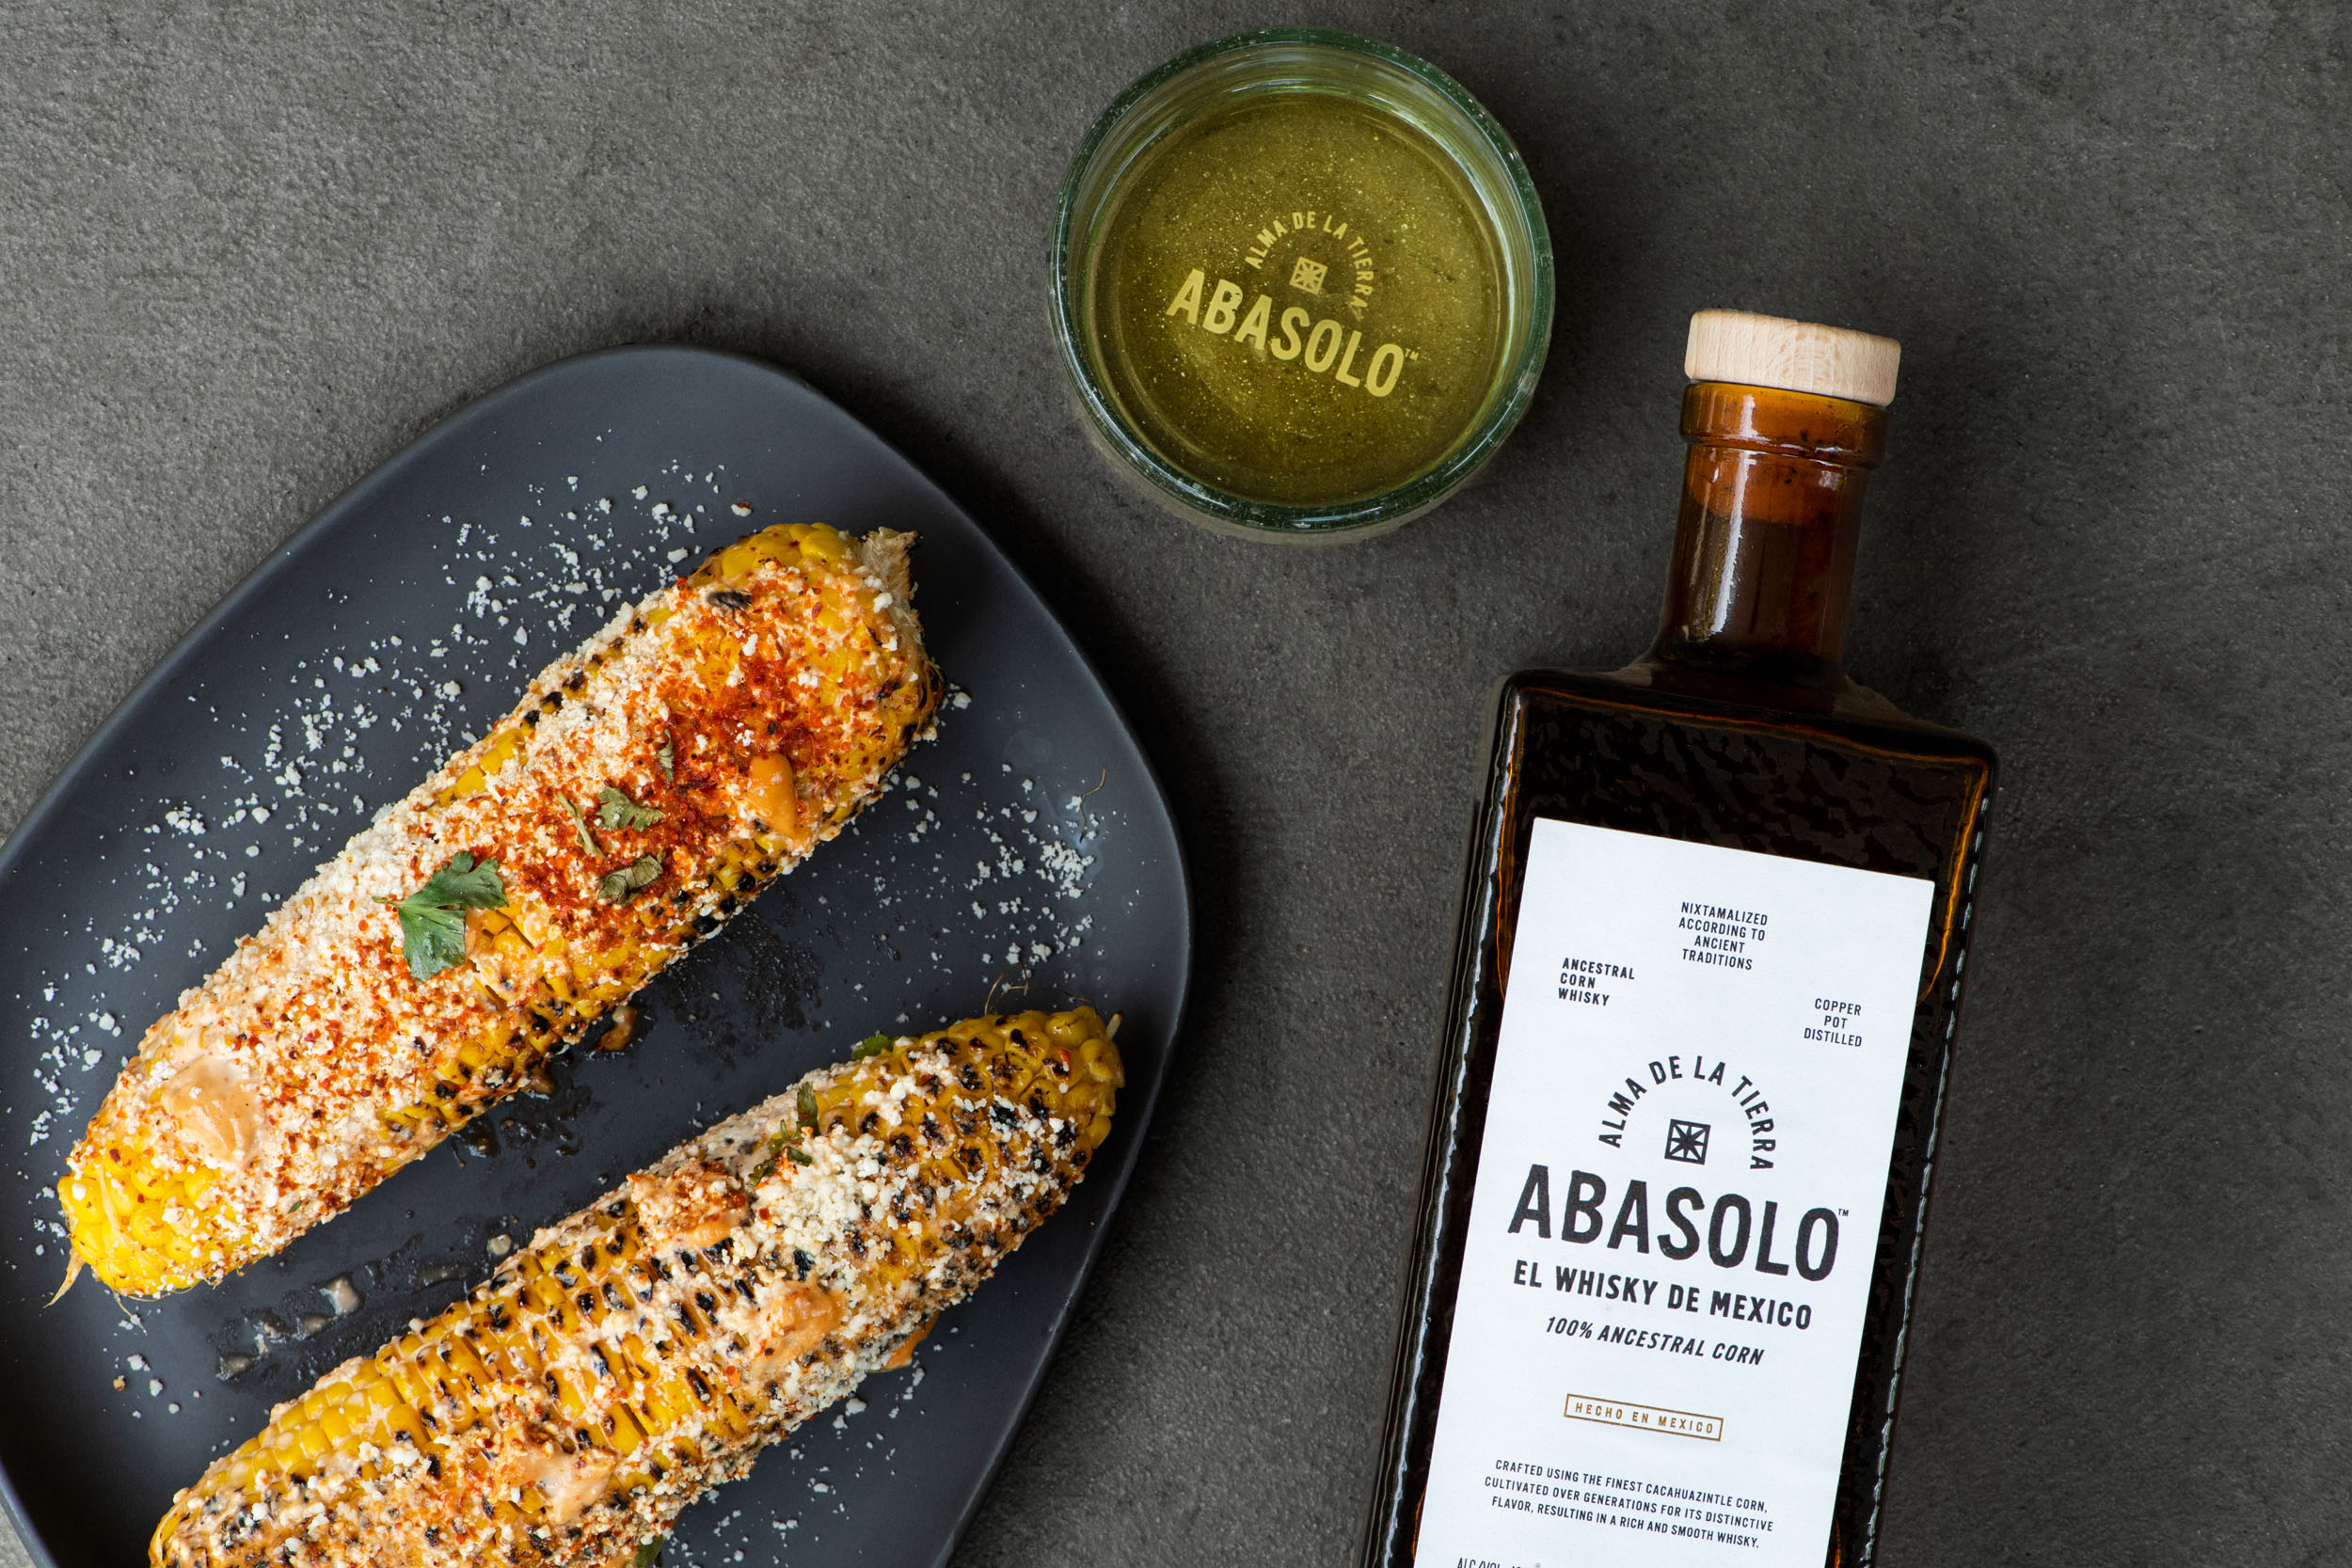 Pernod Ricard invests in Abasolo Ancestral Corn Whisky - FoodBev Media